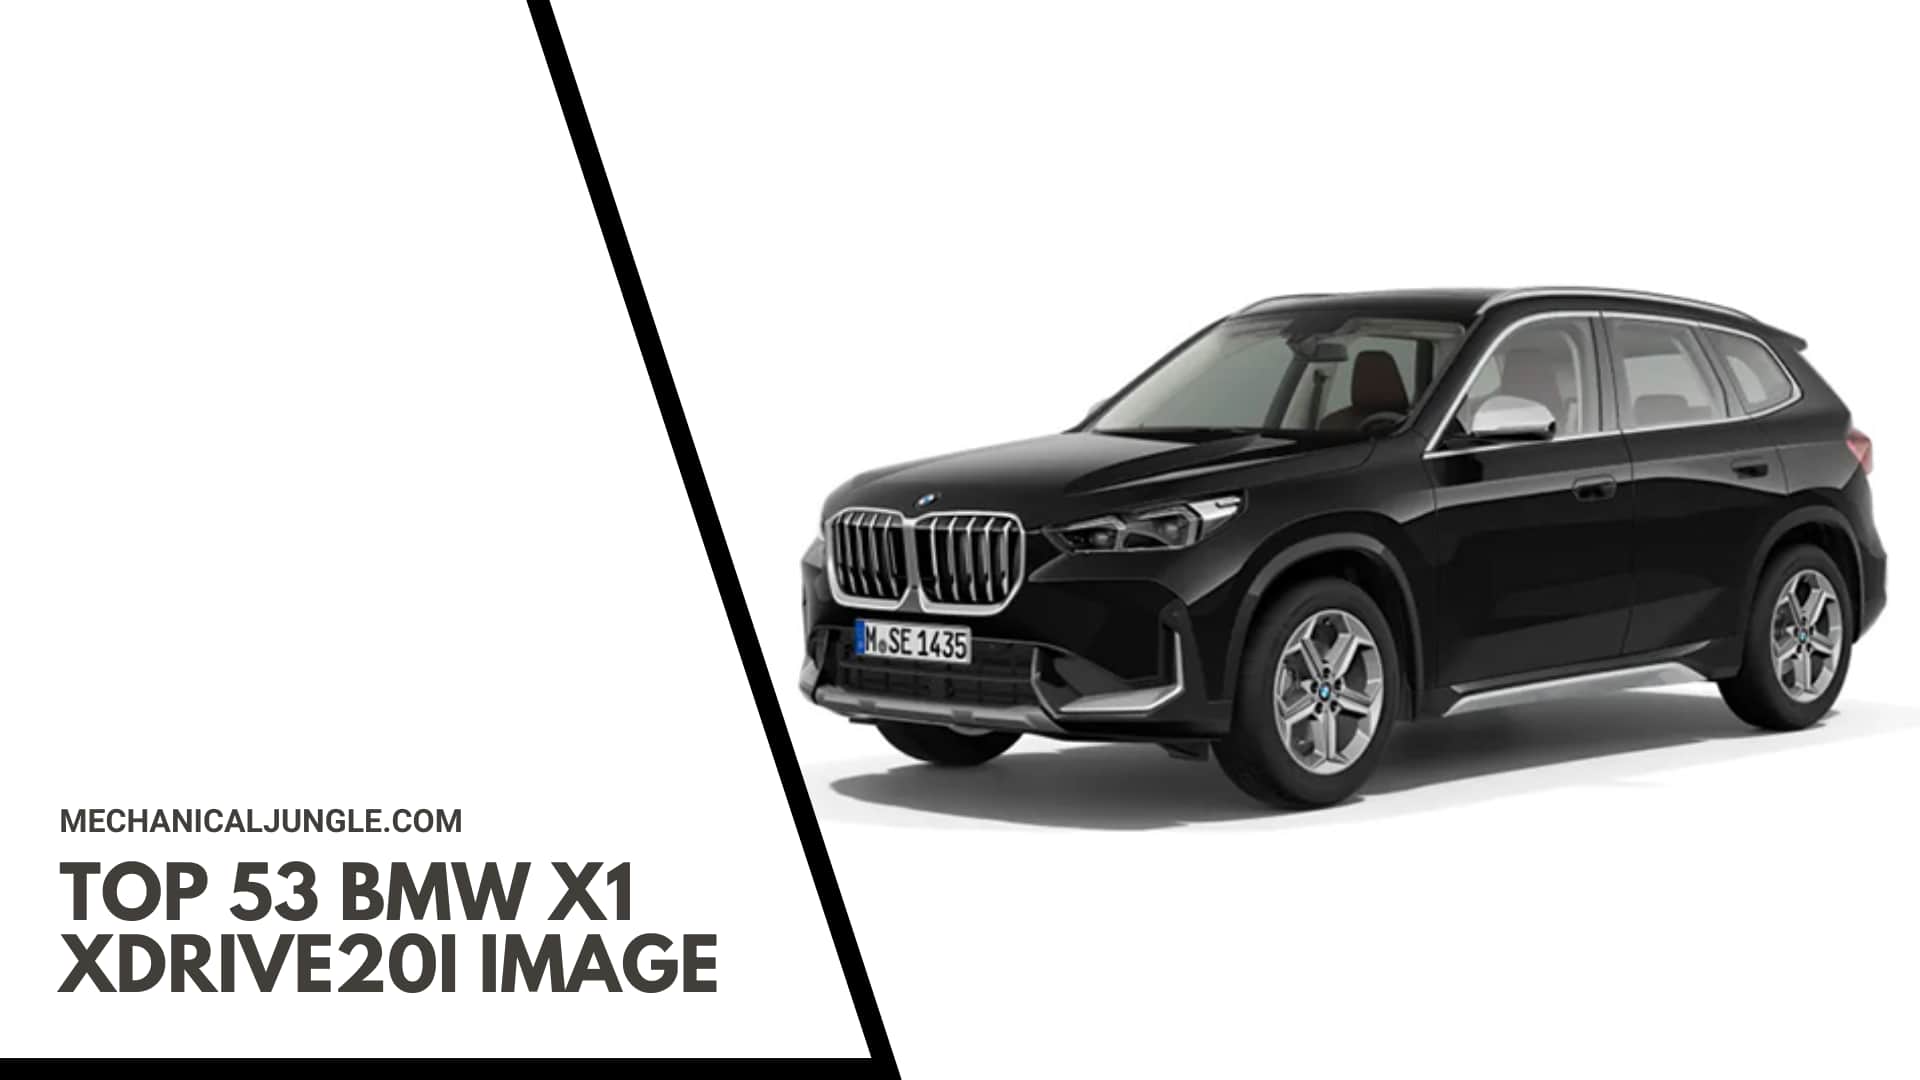 Top 53 BMW X1 xDrive20i Image